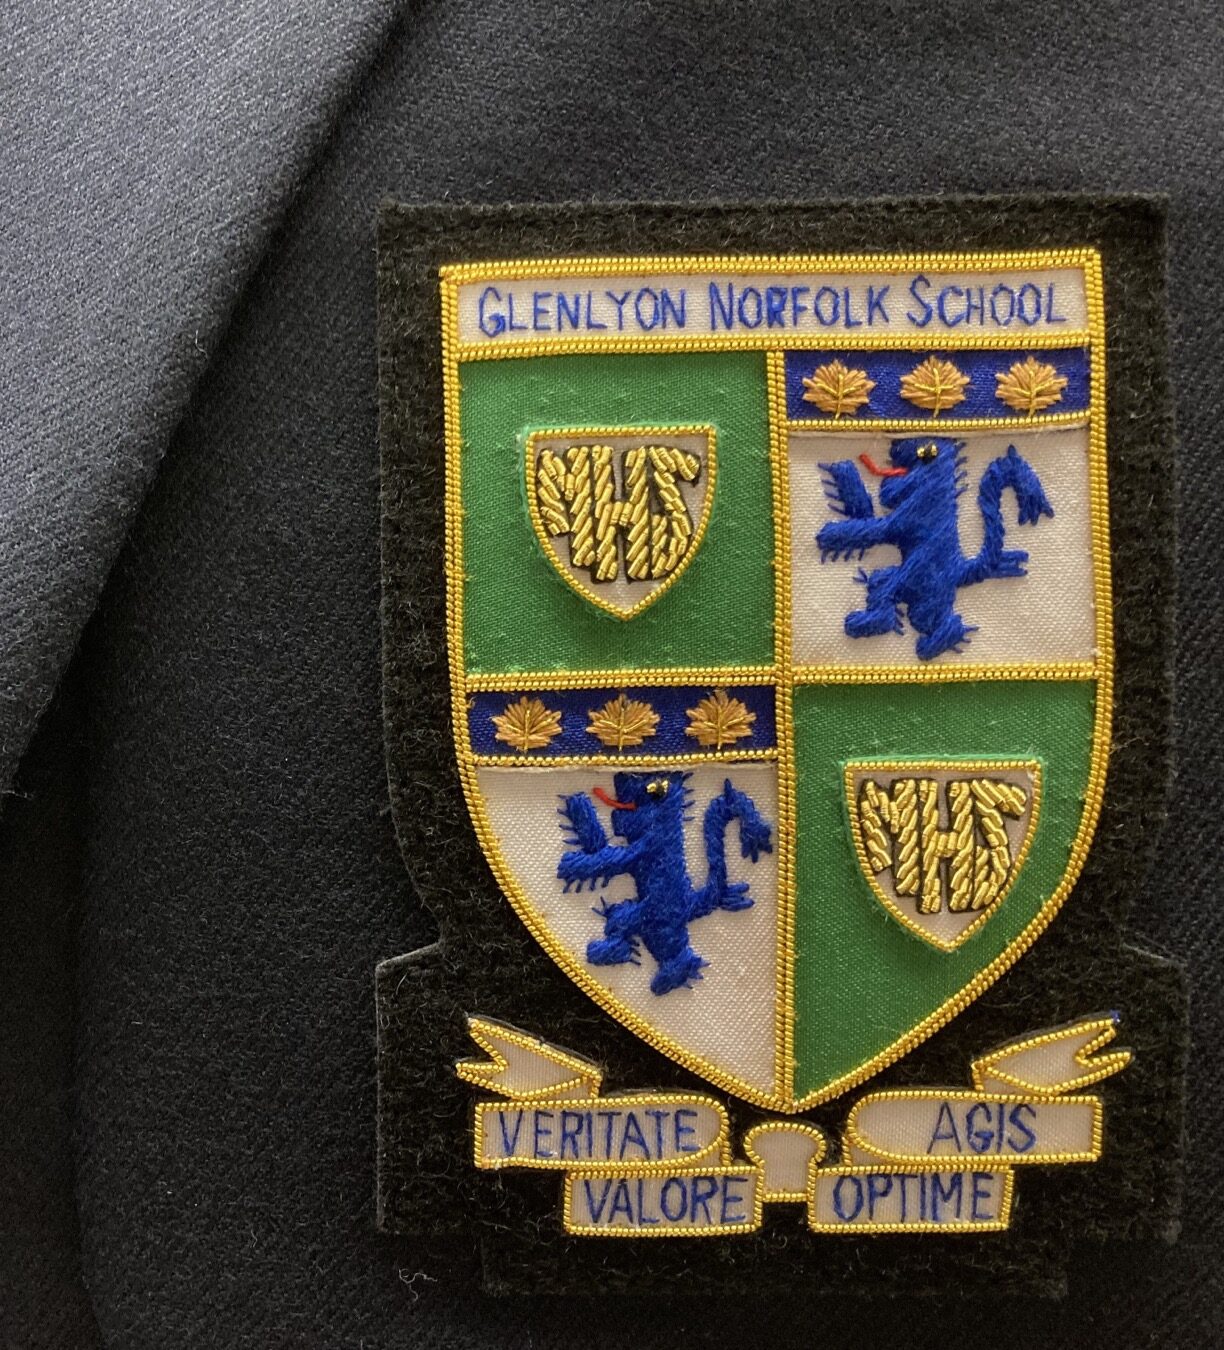 gns brand on uniform